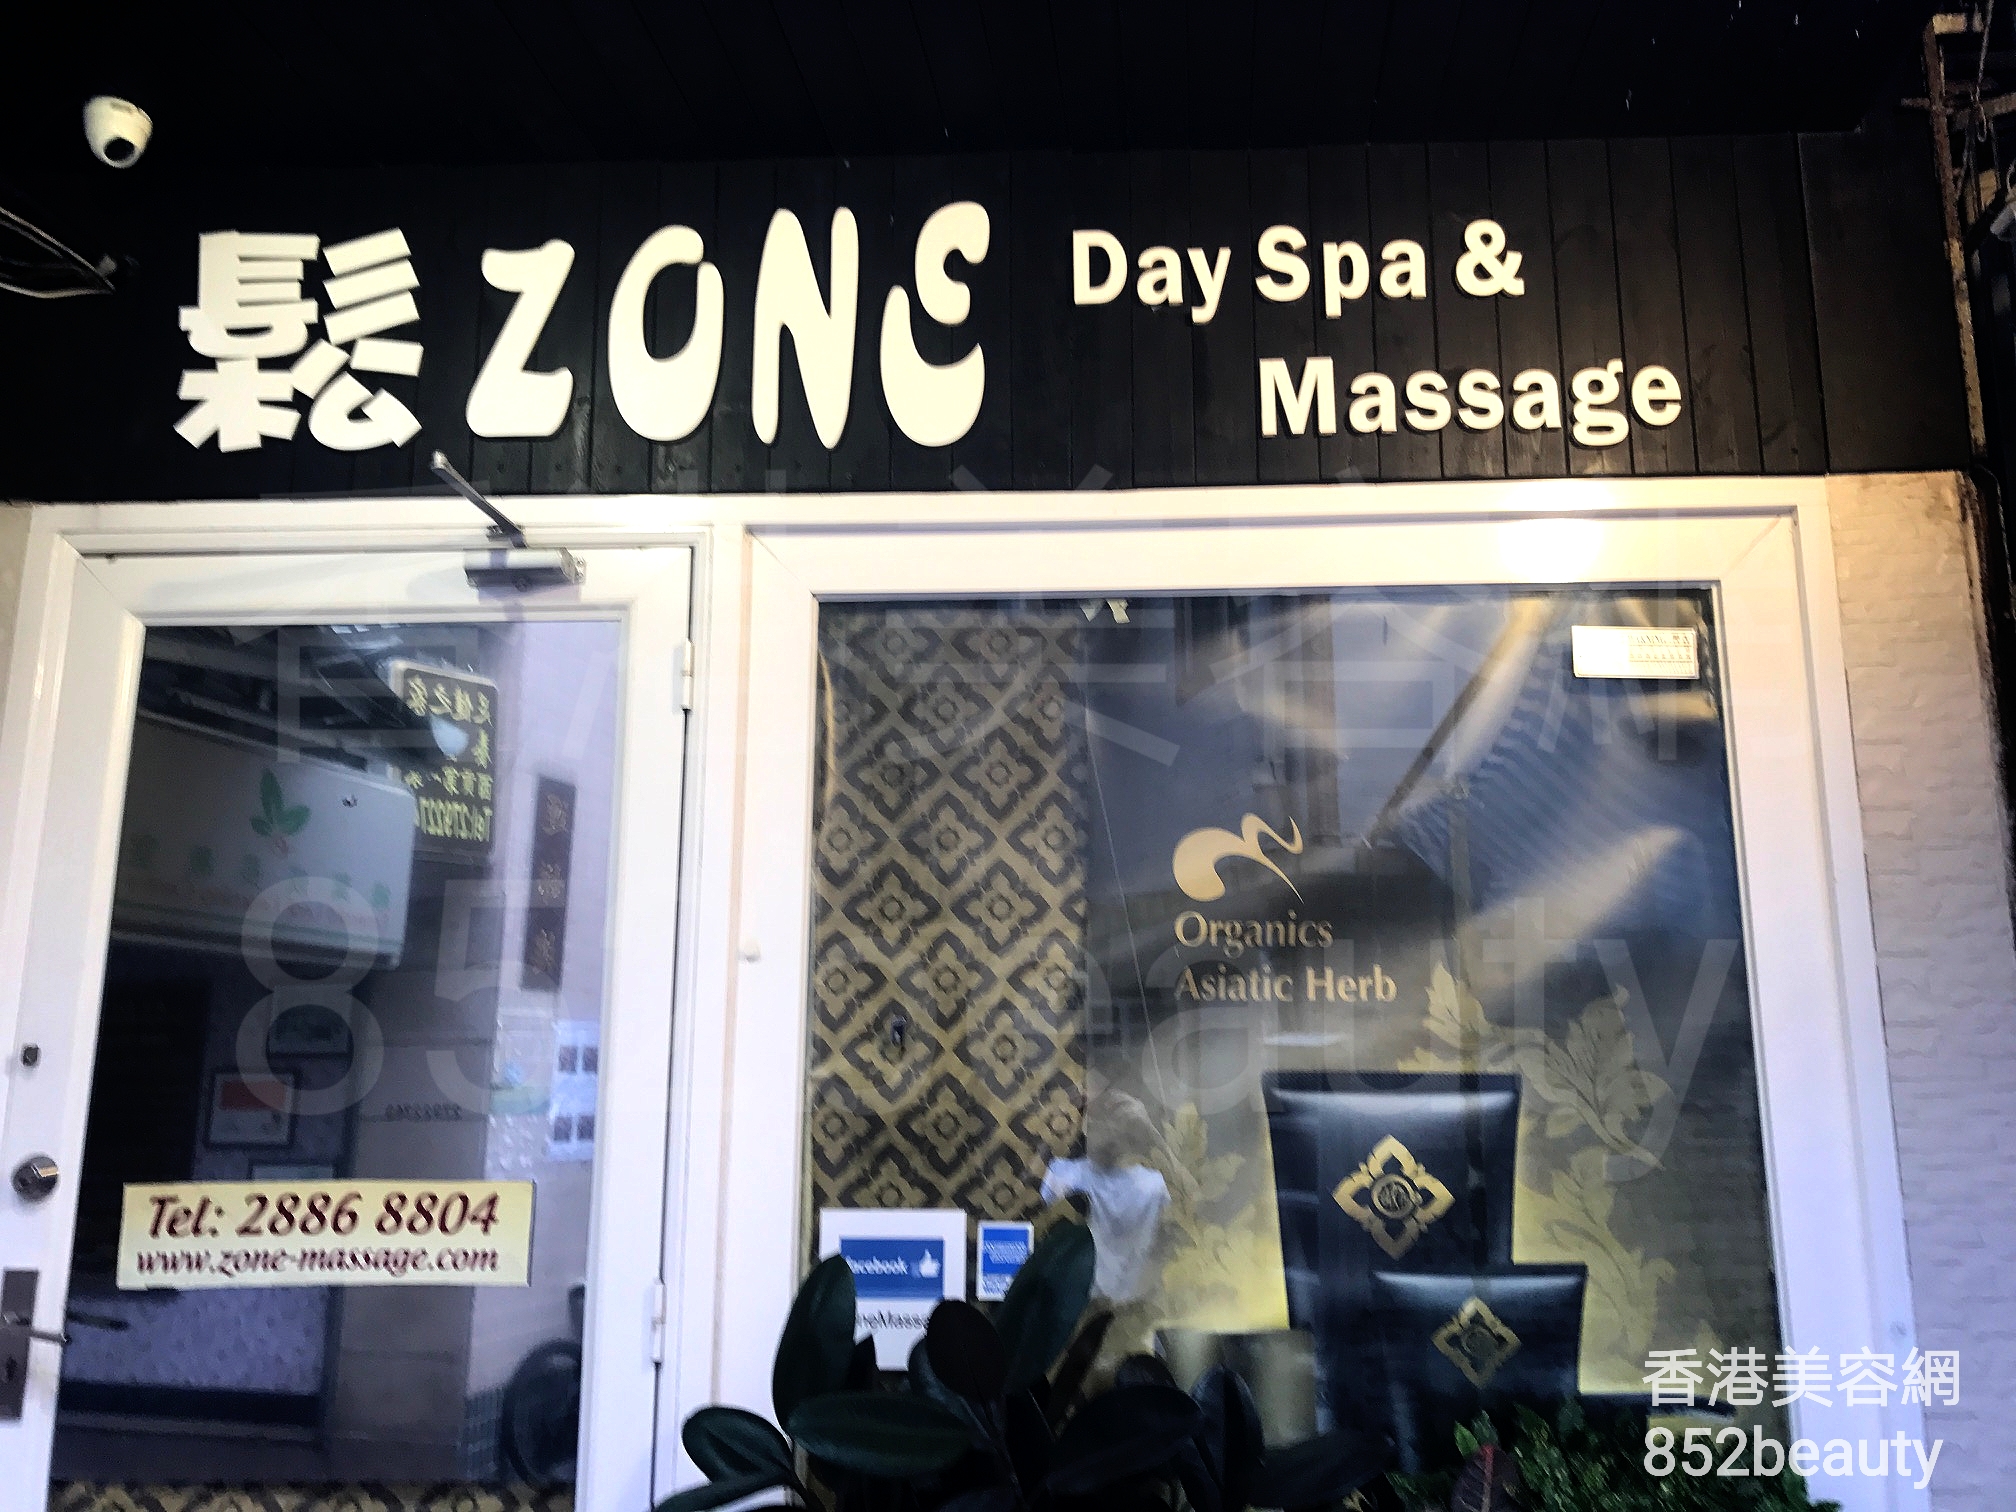 香港美容網 Hong Kong Beauty Salon 美容院 / 美容師: 鬆Zone Day Spa & Massage